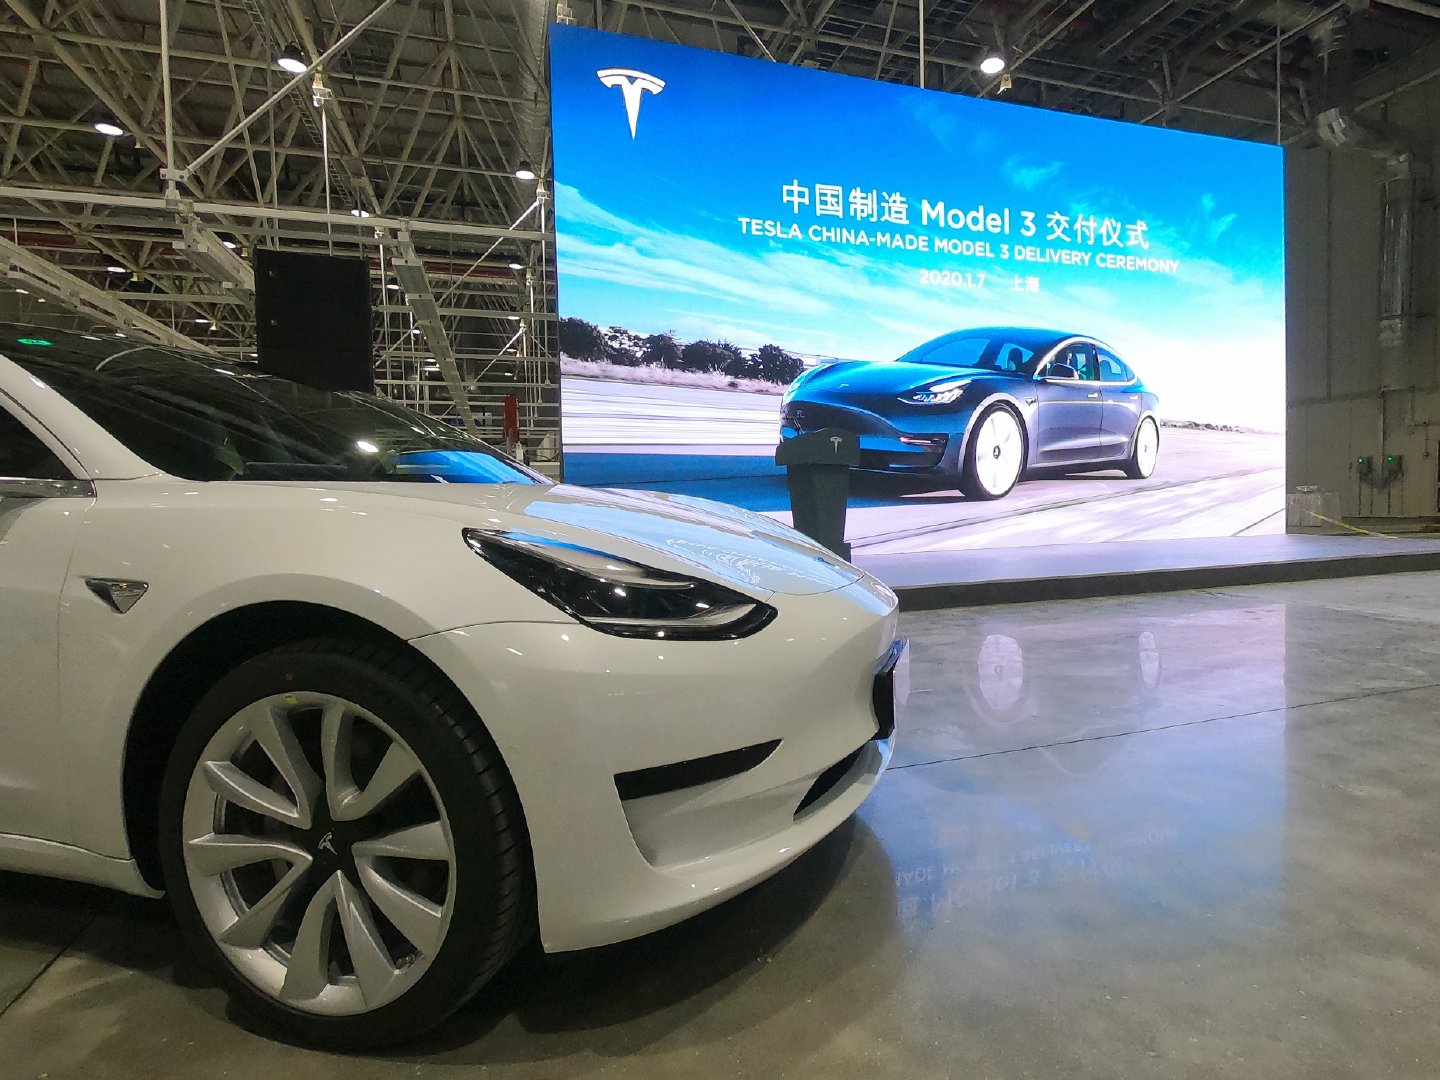 Tesla-China-Model-3-Delivery-Event-Jan-7-4